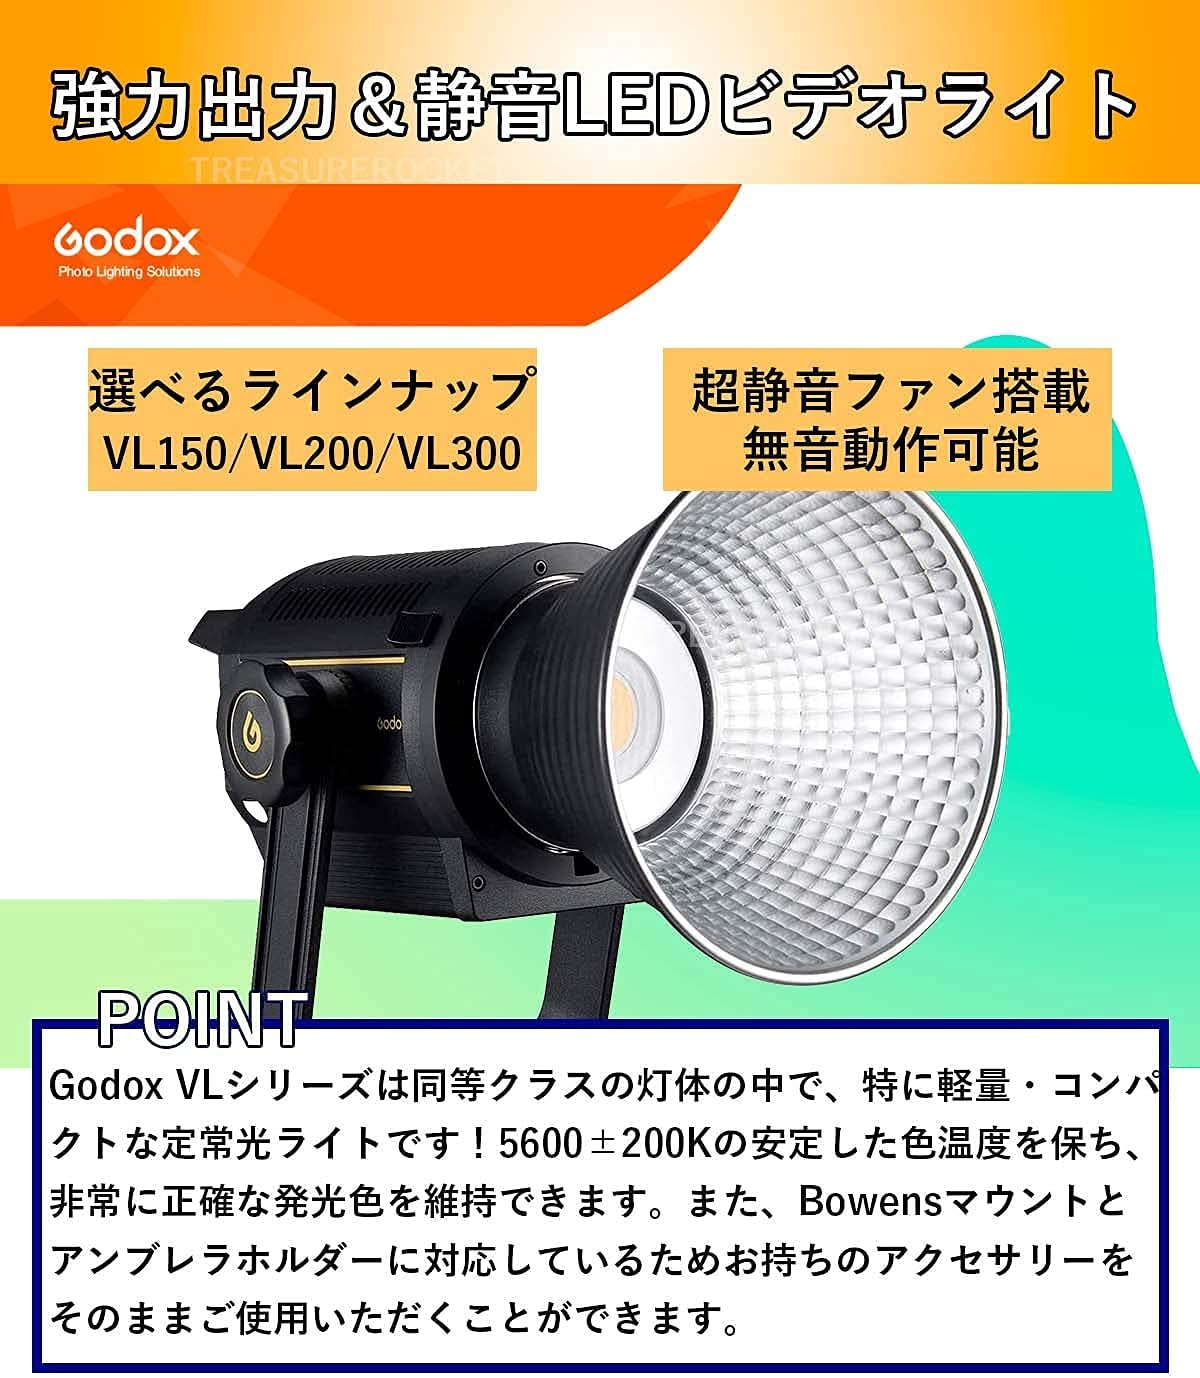 Godox VL150 LEDライト ビデオ照明 エアコンの風を有効活用 www.trotter.pl